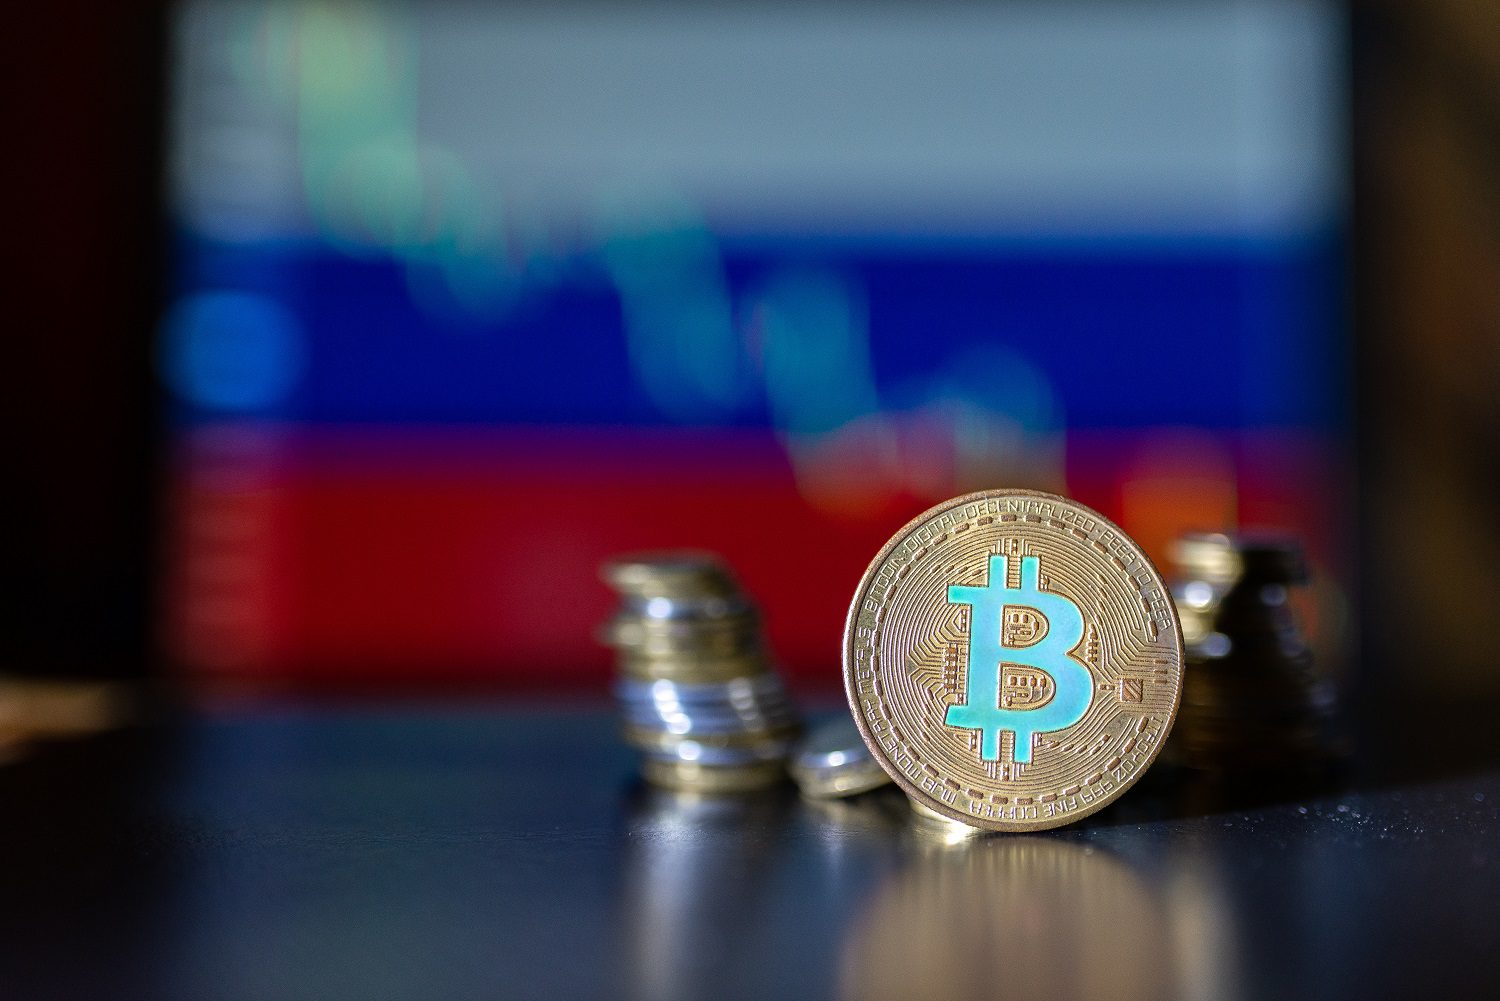 Un token destinado a representar a Bitcoin con el telón de fondo de la bandera rusa.